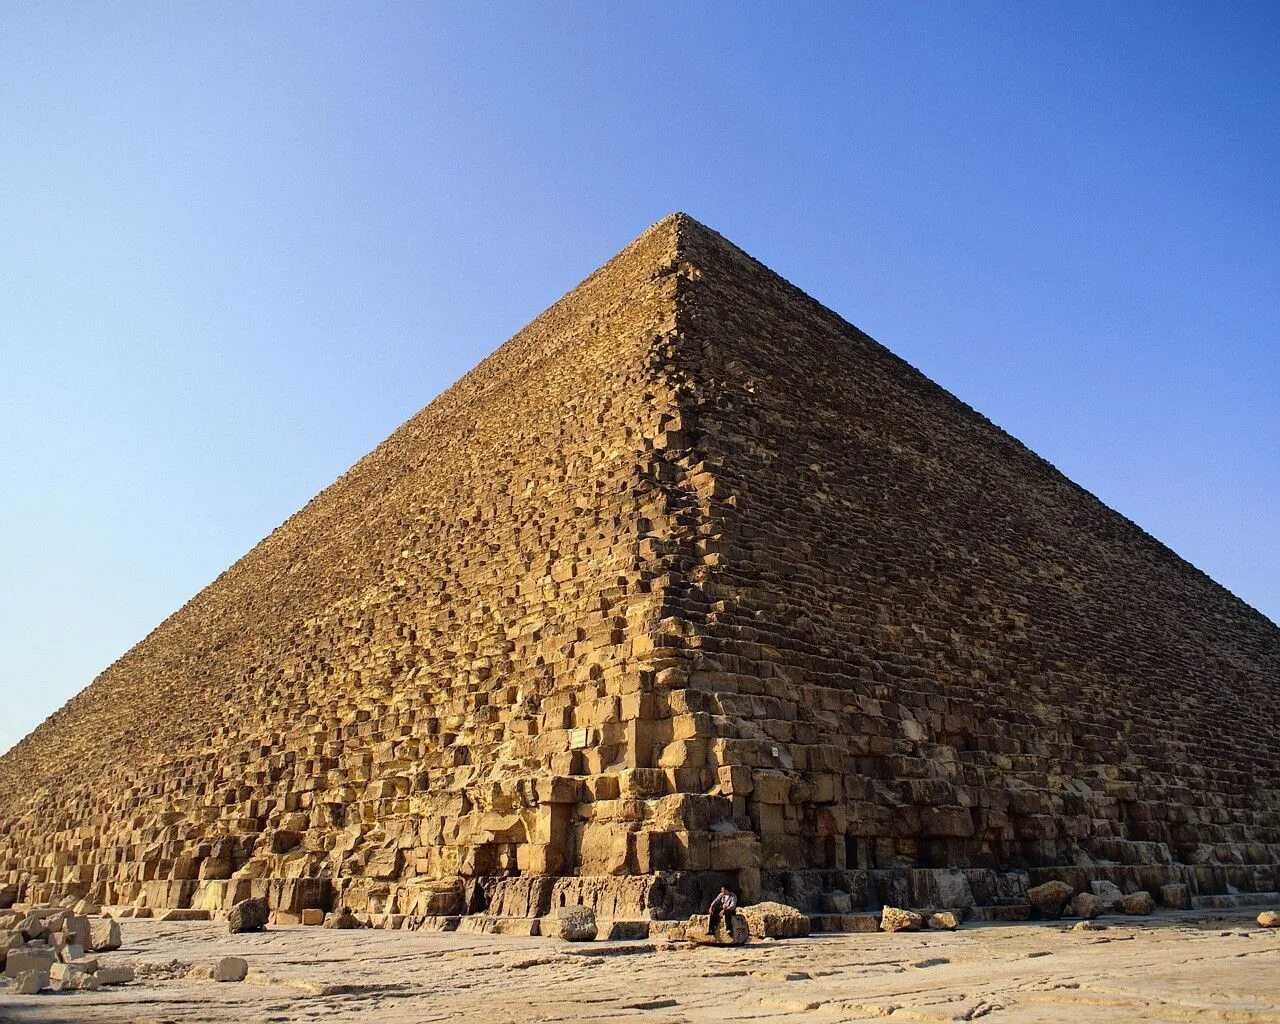 Misr piramidalari haqida. Пирамида Хеопса. Стройка пирамиды Хеопса. Пирамида дом фараона. Постройка египетских пирамид.